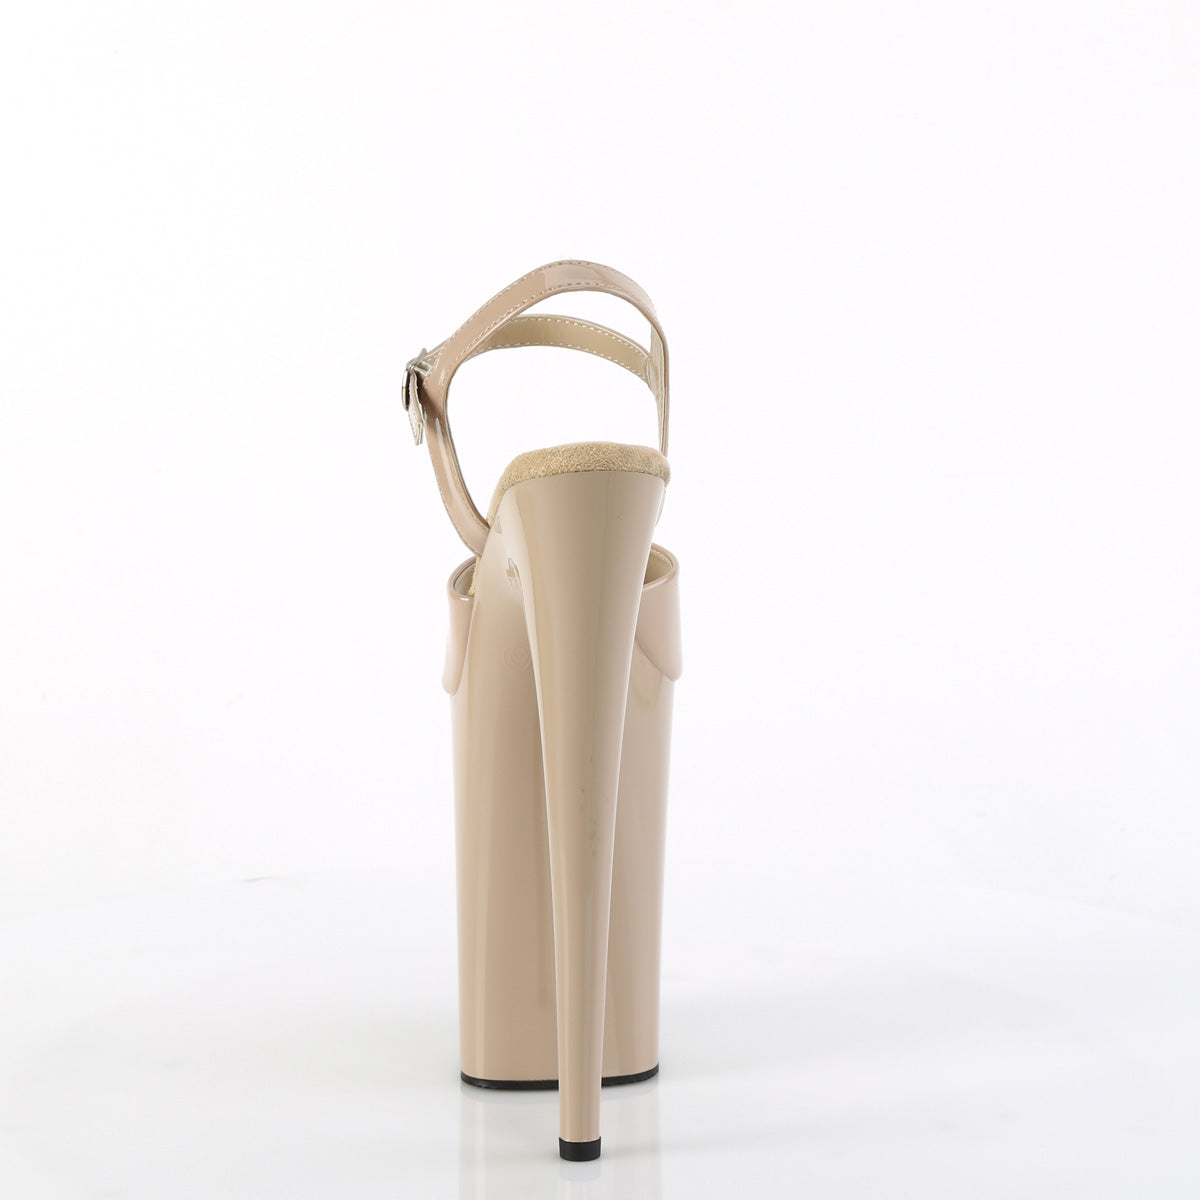 INFINITY-909 Pleaser Nude Patent/Nude Platform Shoes [9 Inch High Heels]